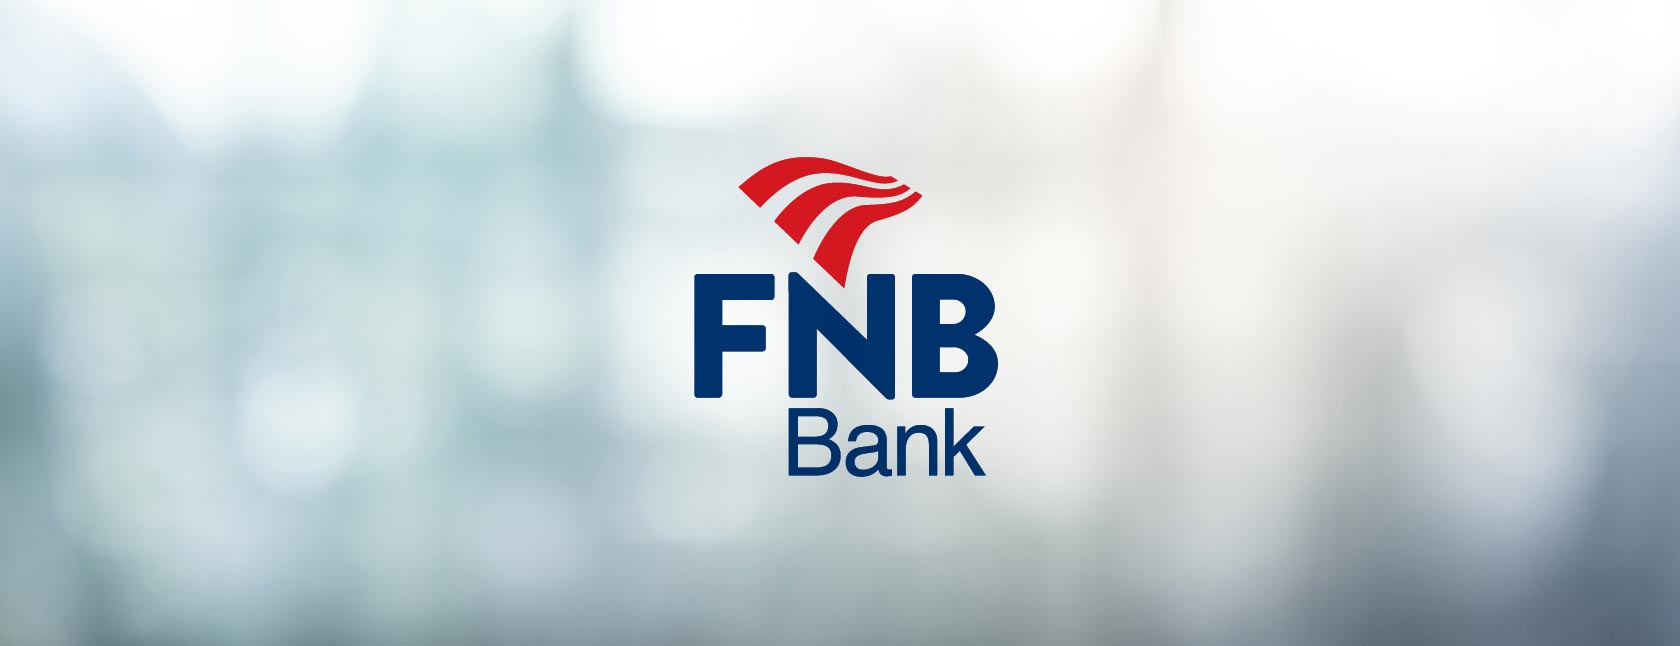 Window with FNB Bank logo displayed on it